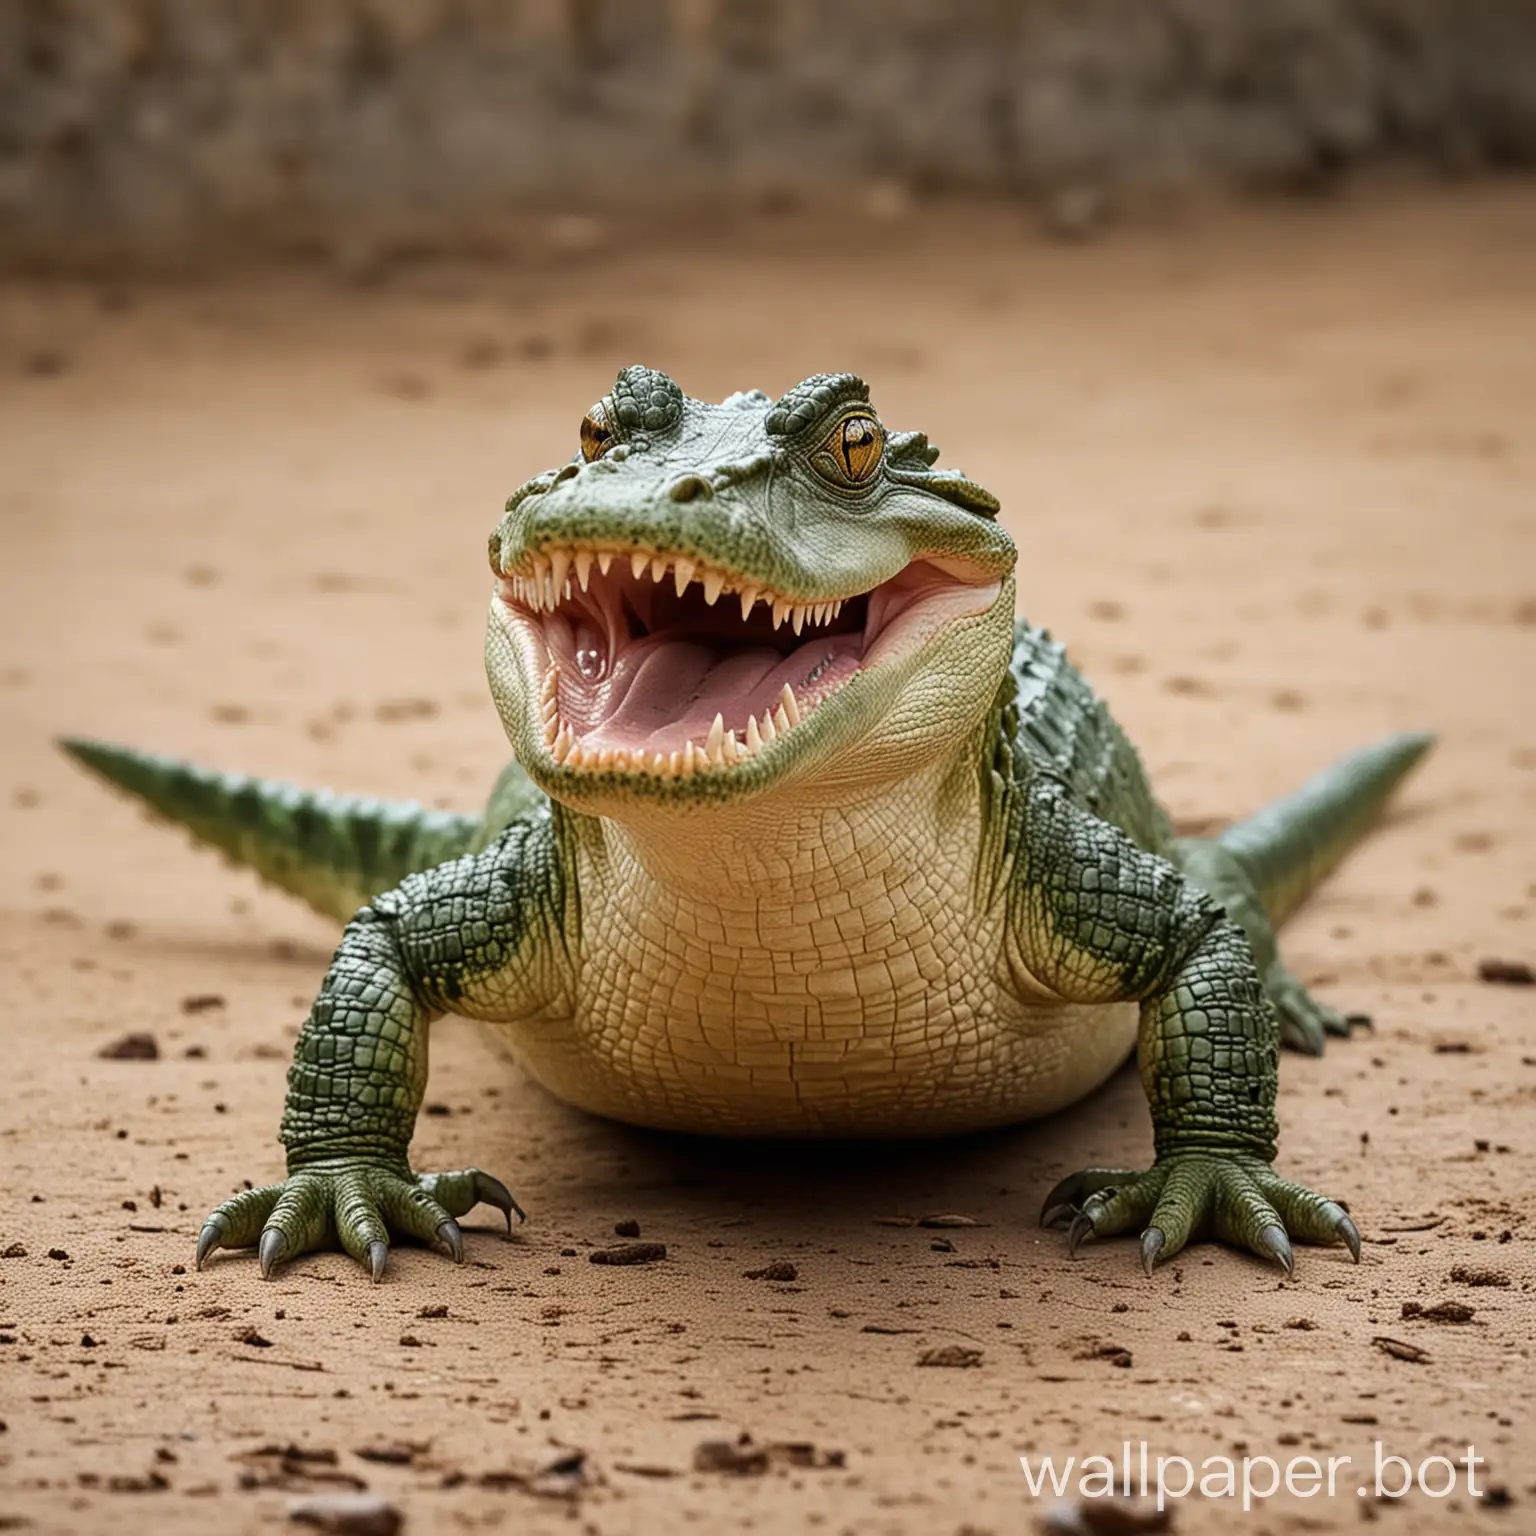 Funny Crocodile